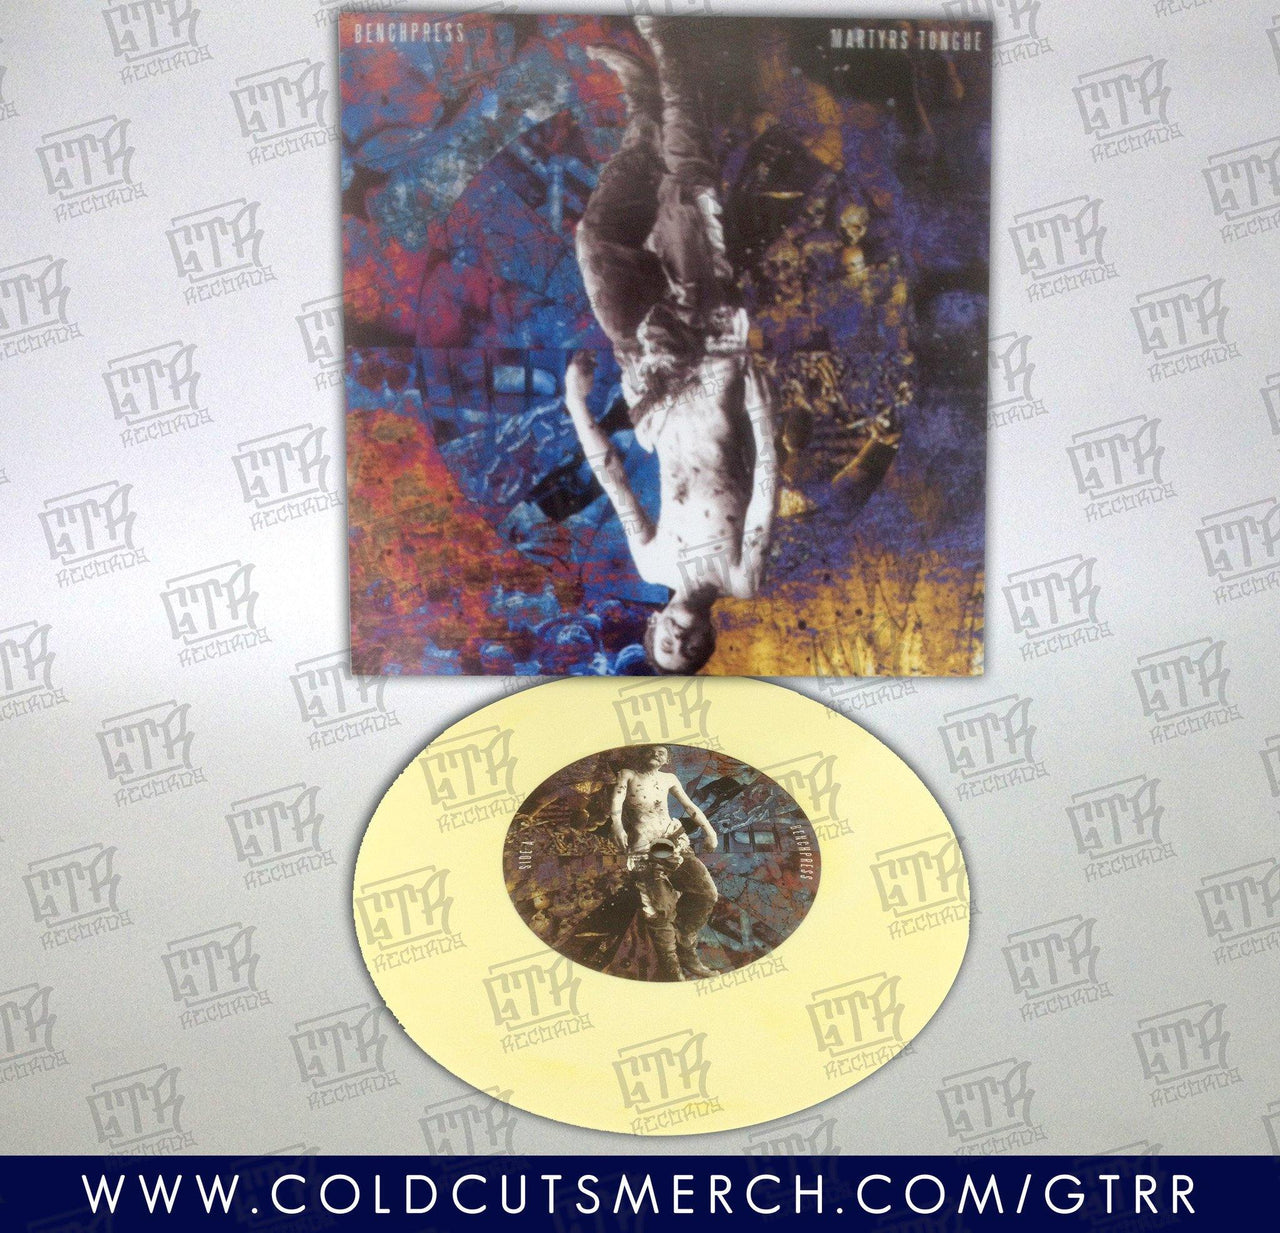 Buy – Benchpress/Martyr's Tongue Split 7" – Band & Music Merch – Cold Cuts Merch